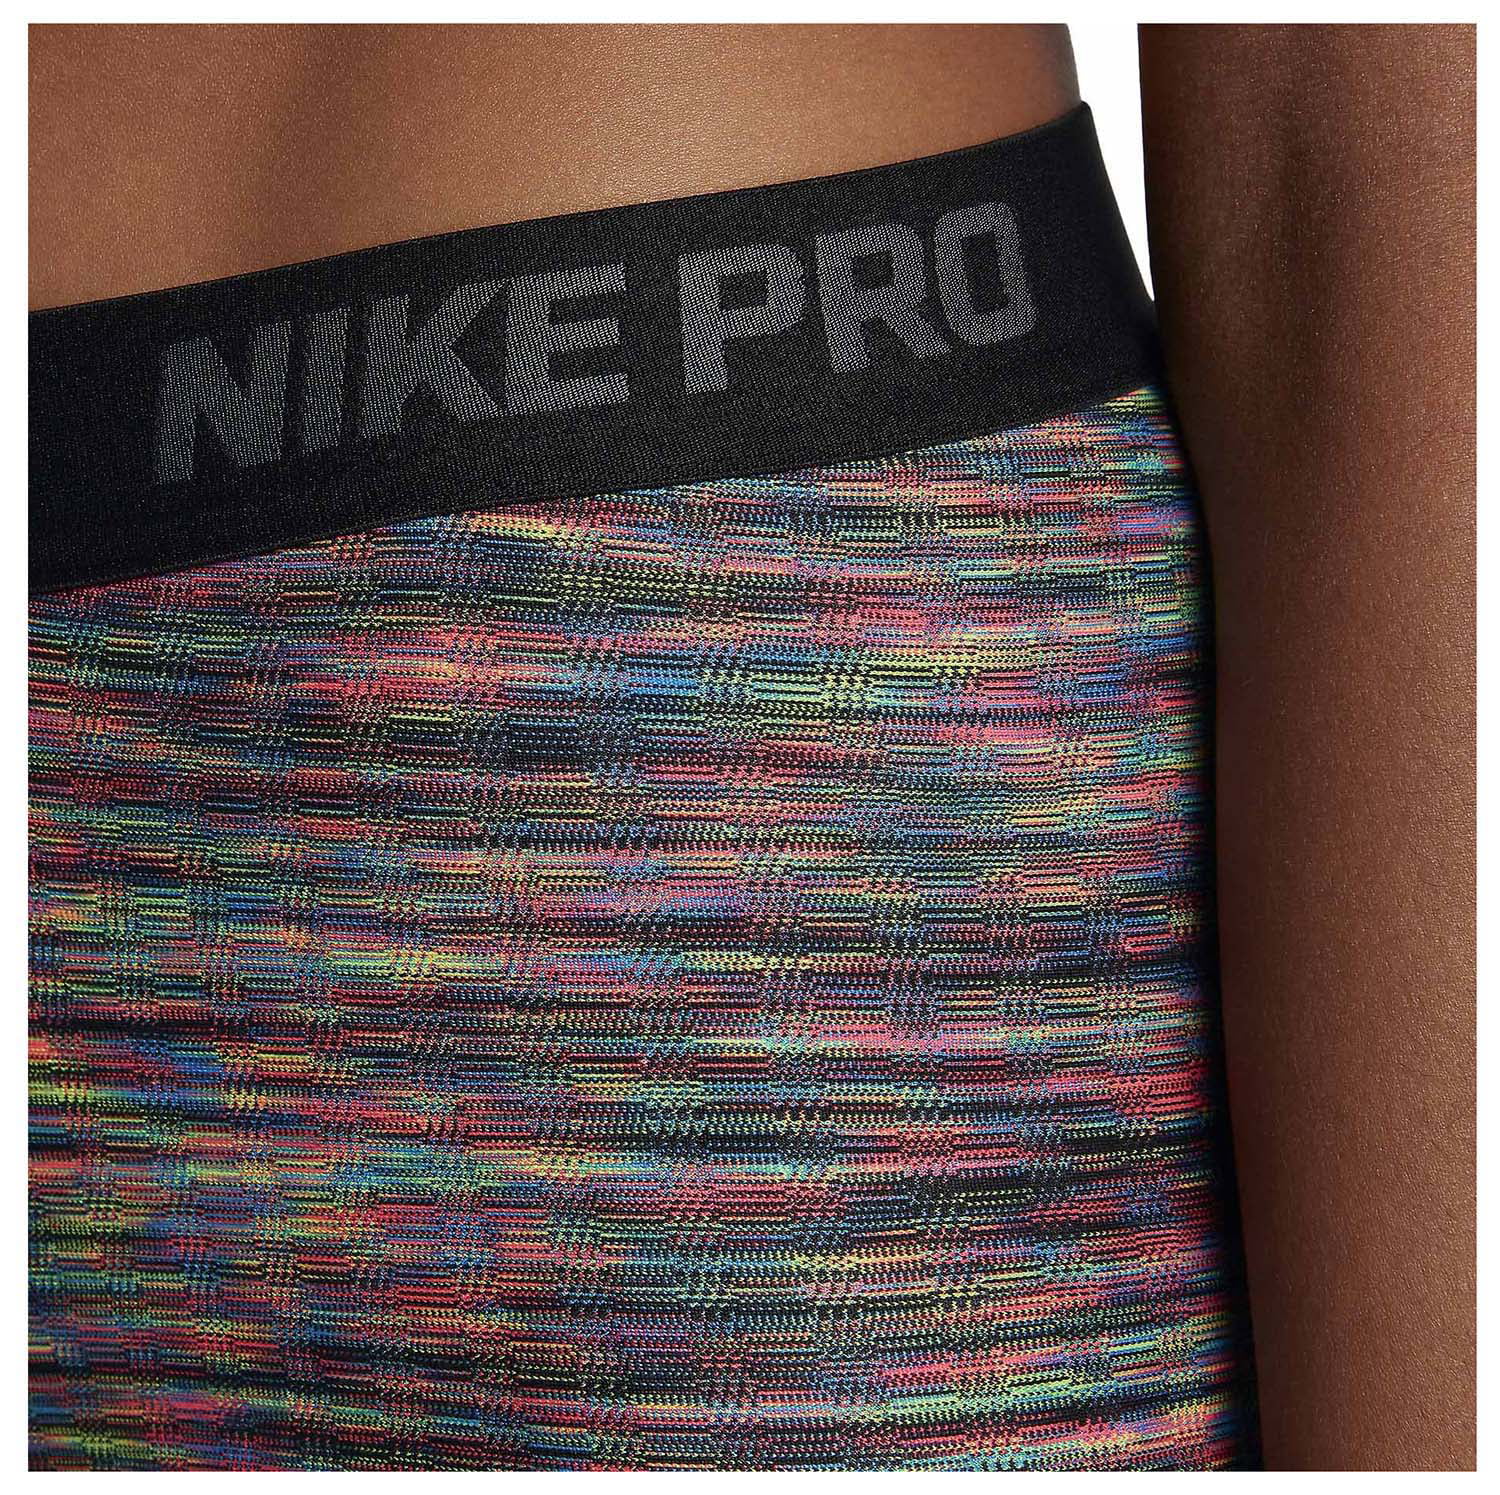 Nike Women's Hyperwarm Brushed Training Tights (Black/Multi Color, Medium)  